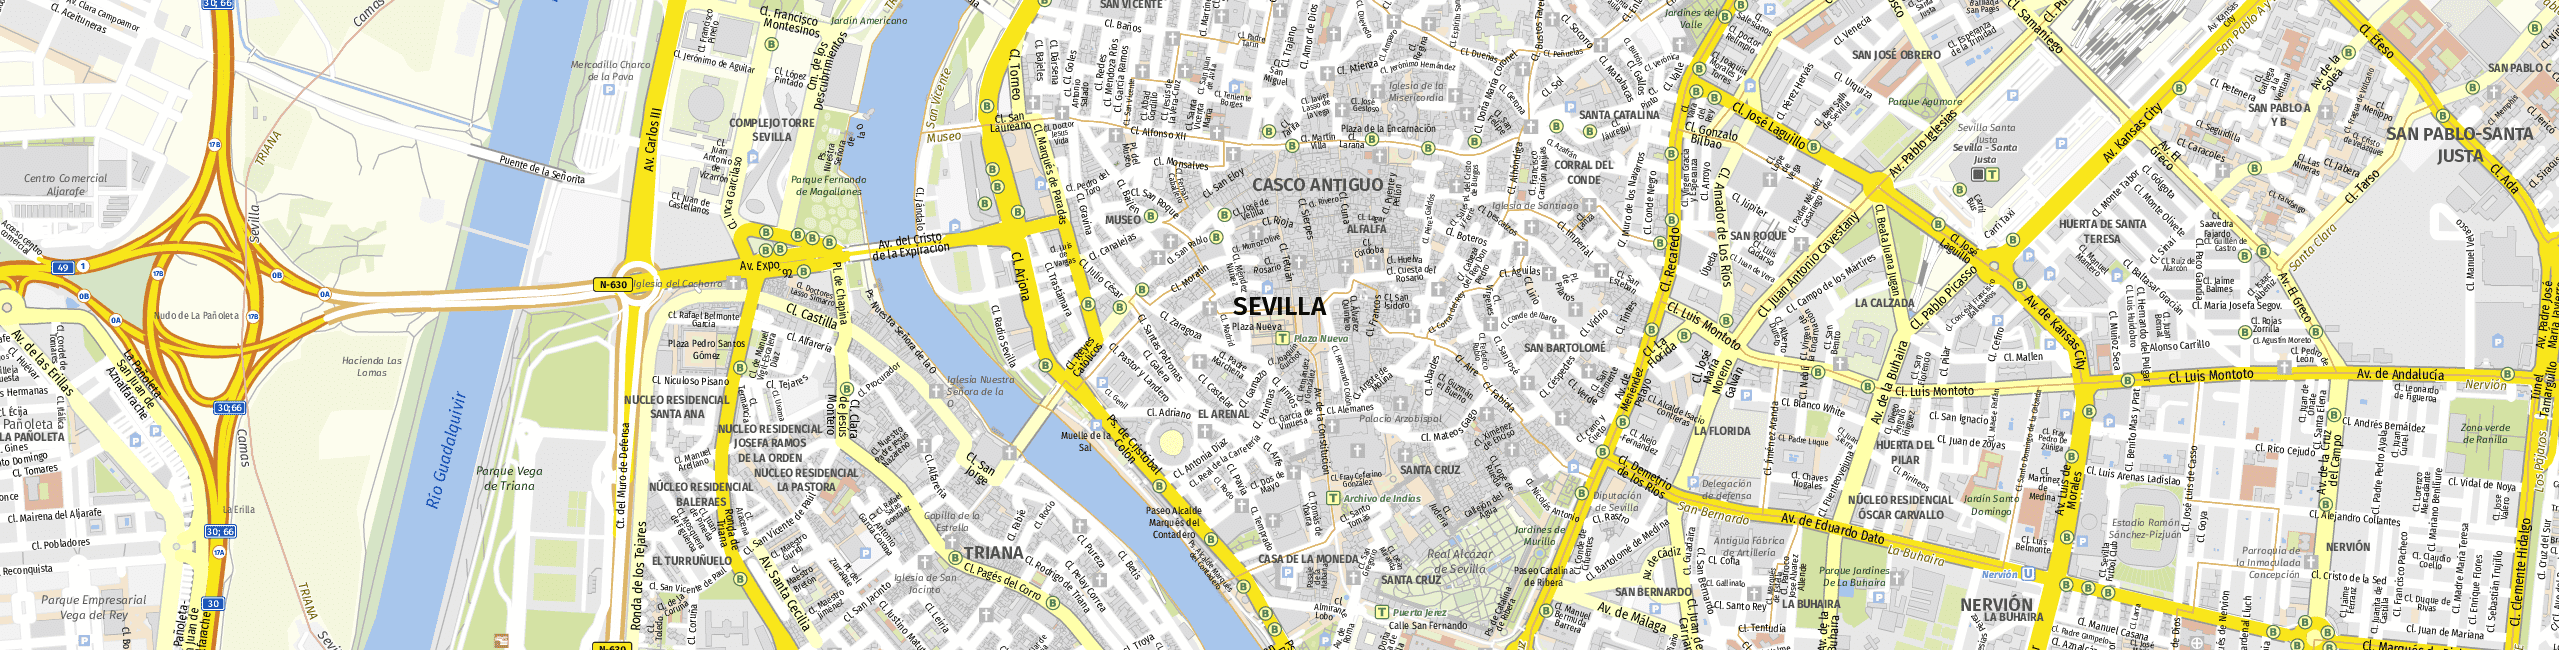 Stadtplan Sevilla zum Downloaden.